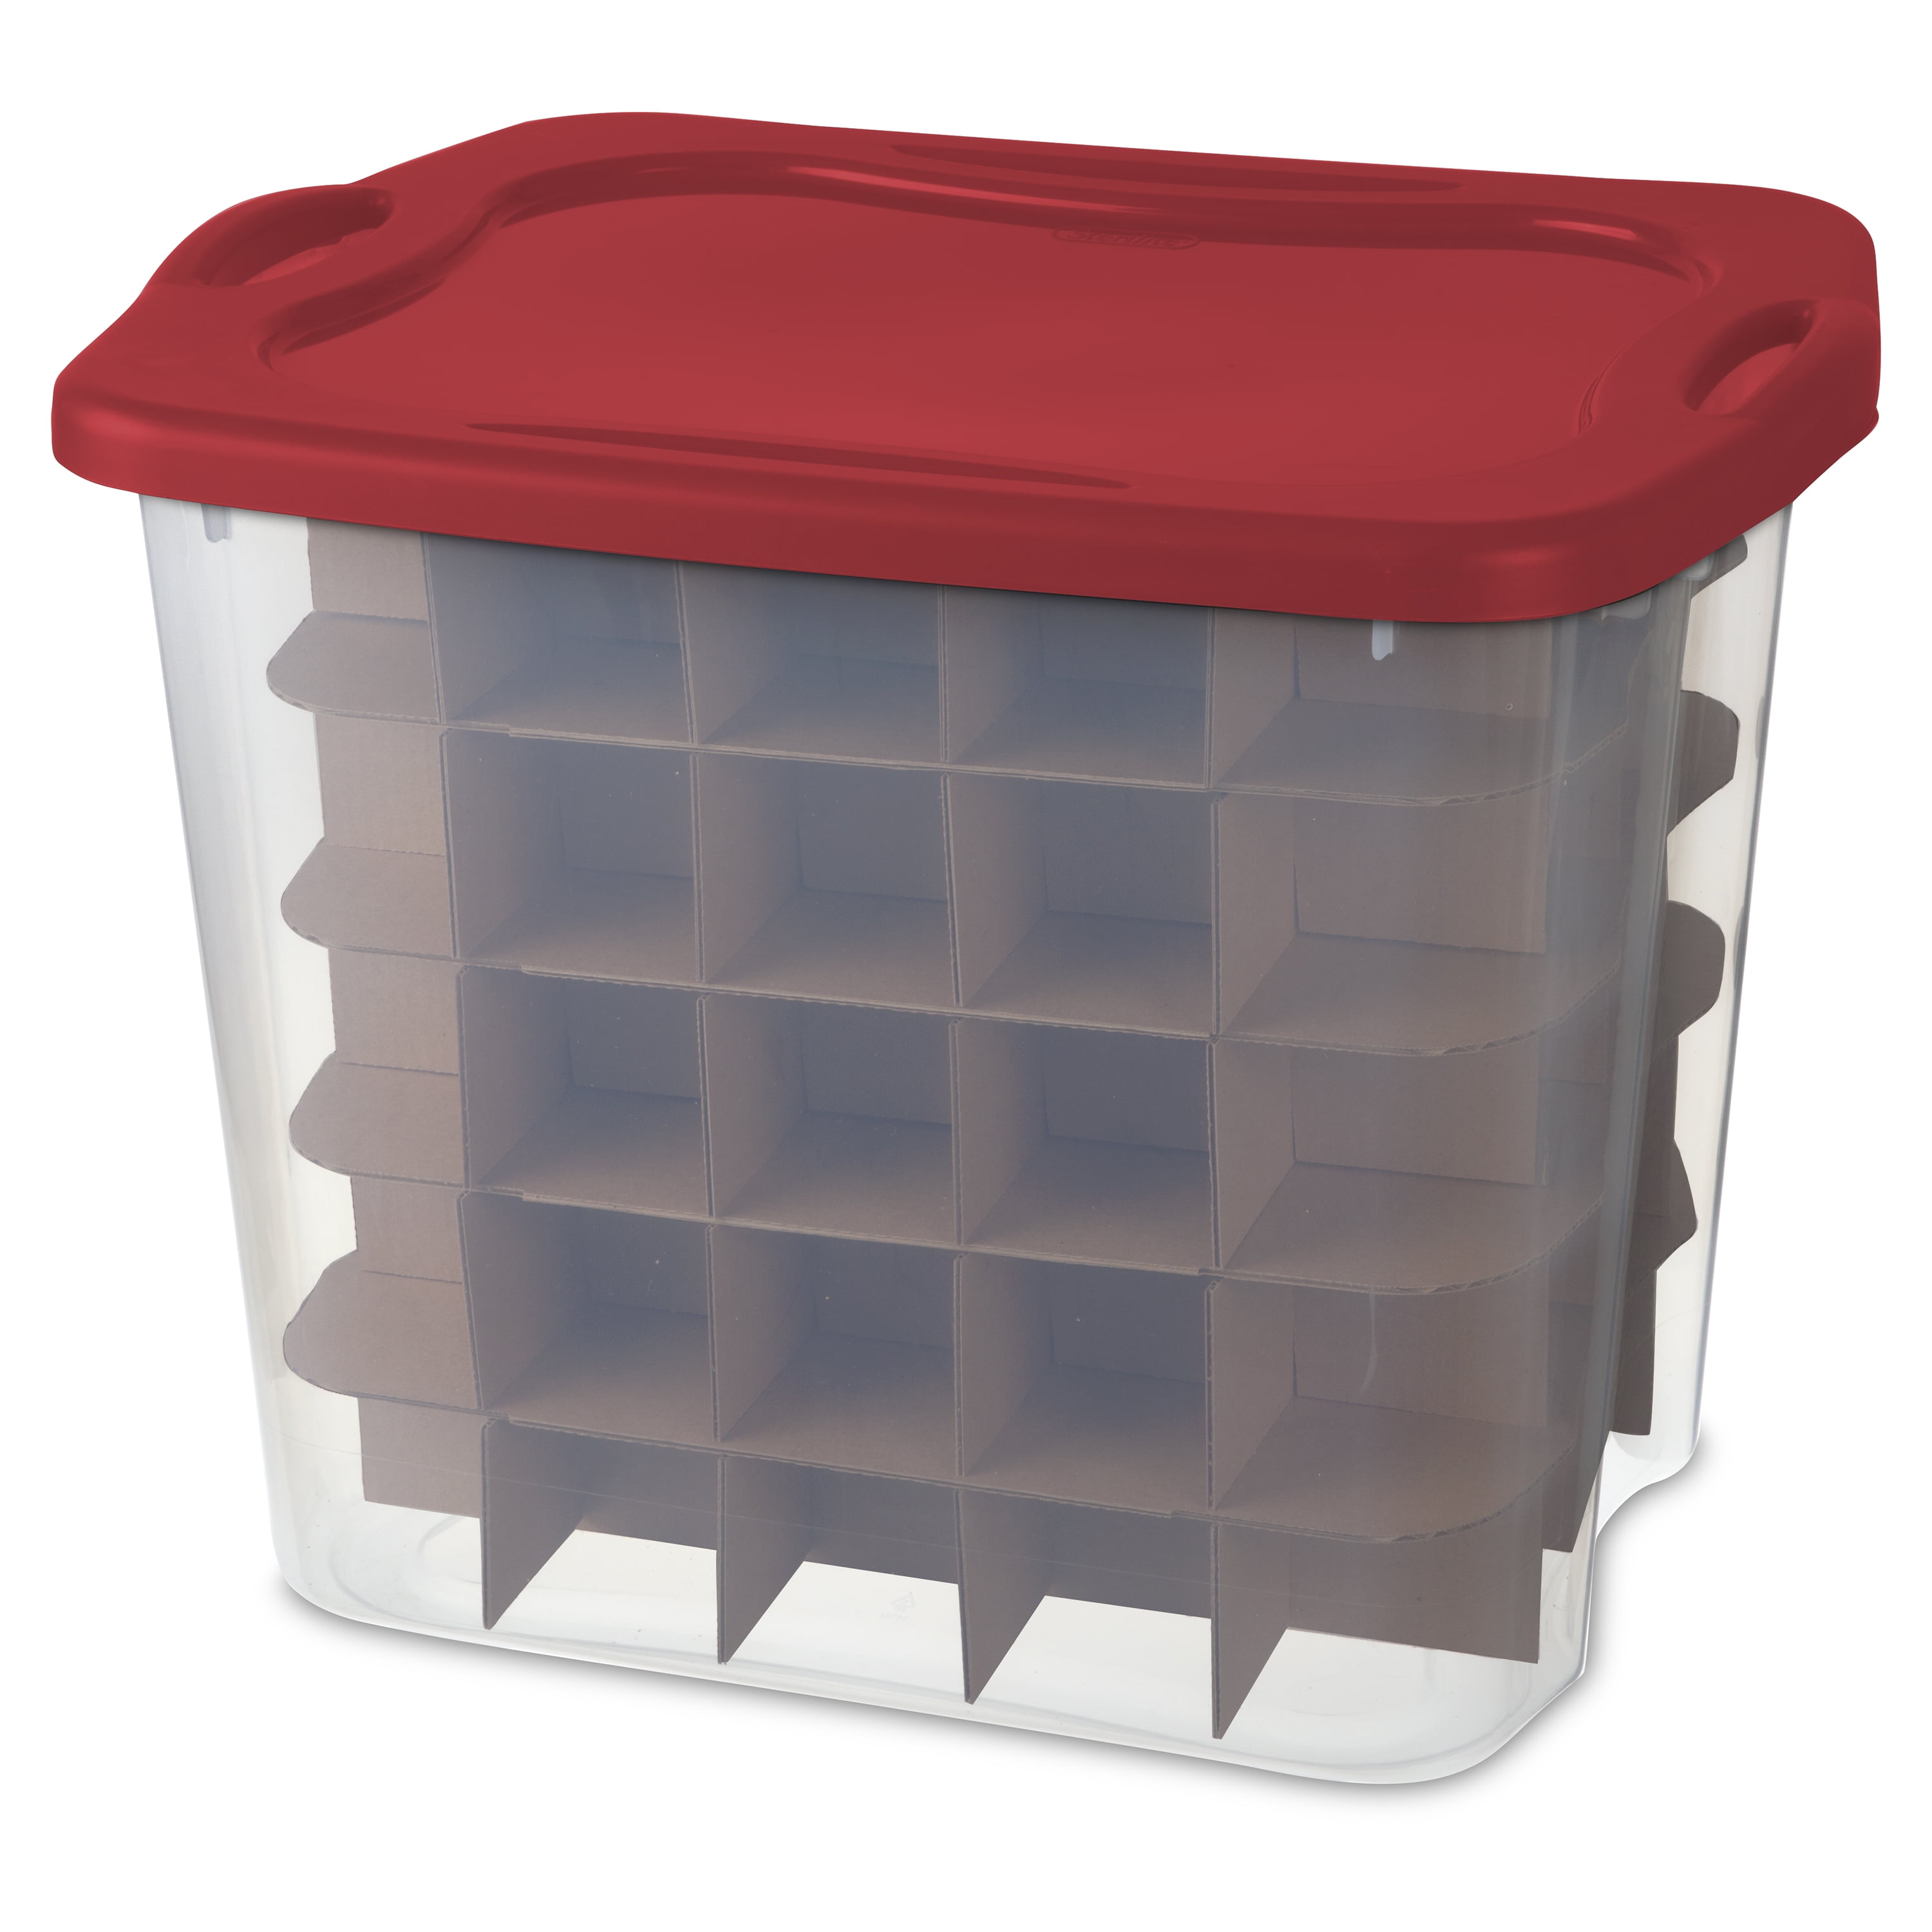 Sterilite 95 Qt Ornament Storage Box- Red – Walmart Inventory